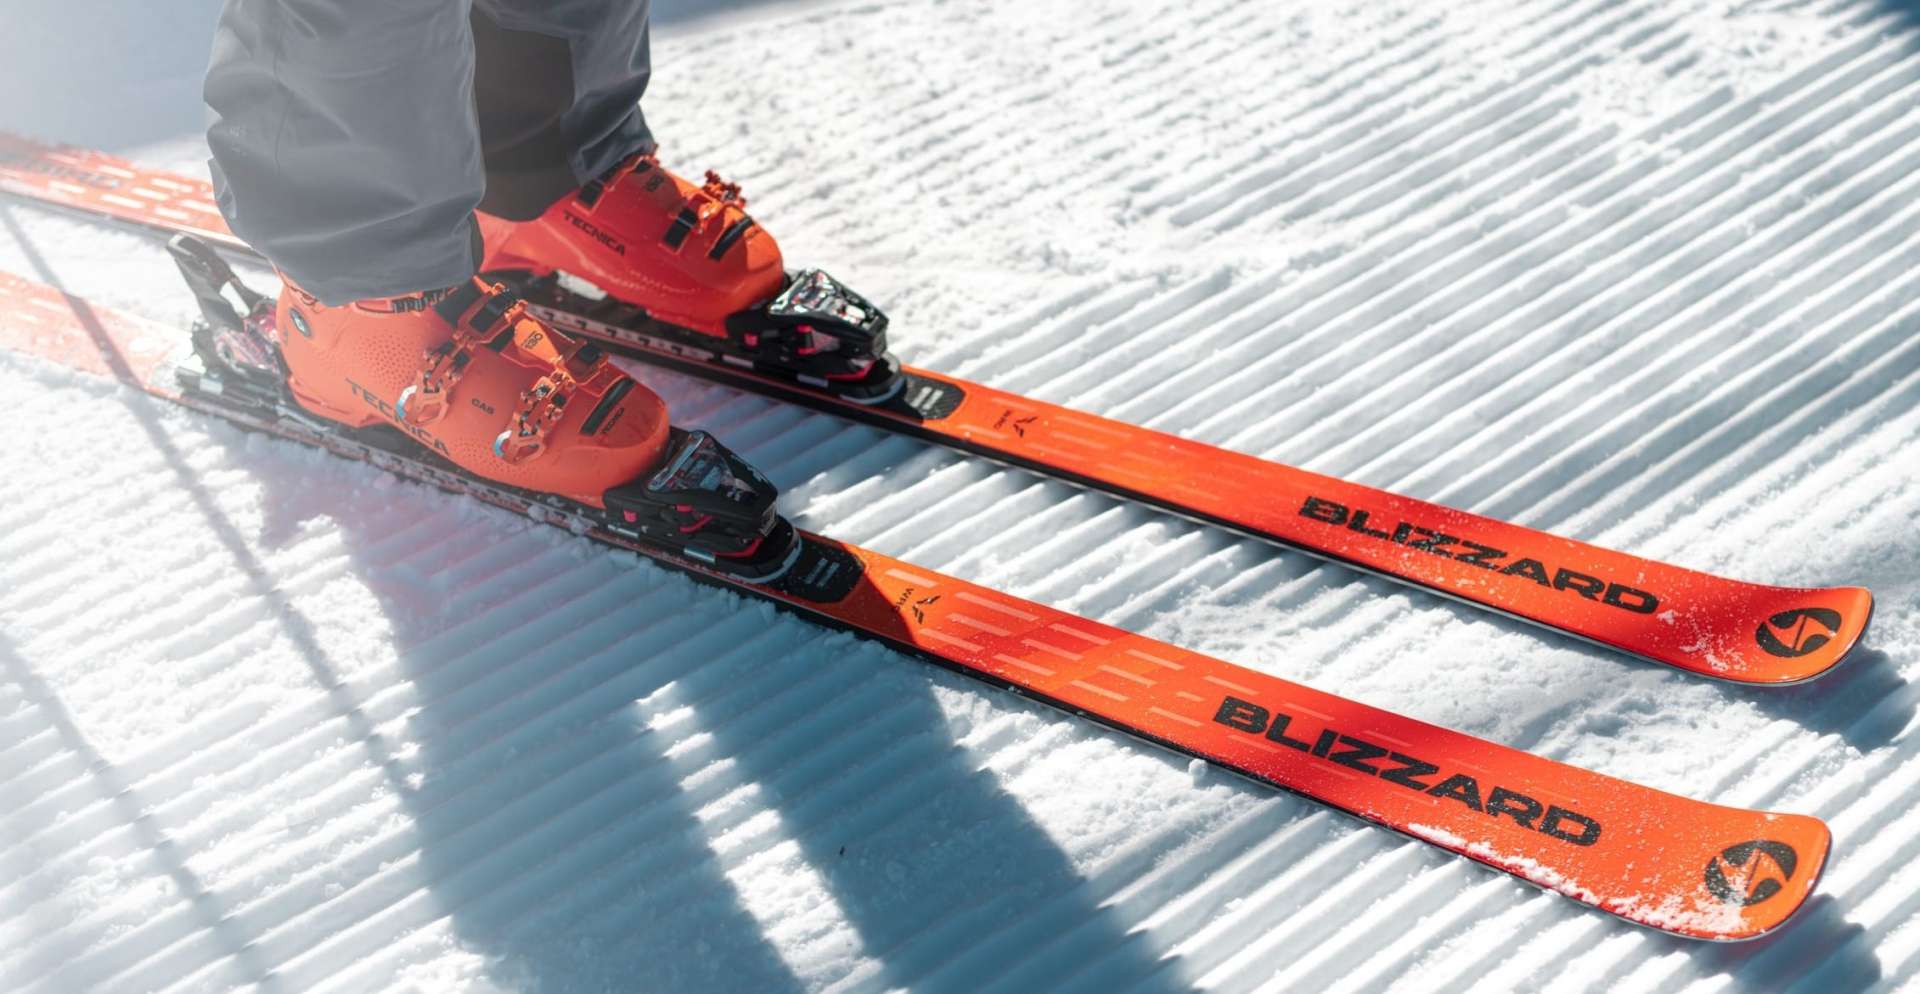 sacca porta scarponi sci / snowboard - Sports In vendita a Venezia